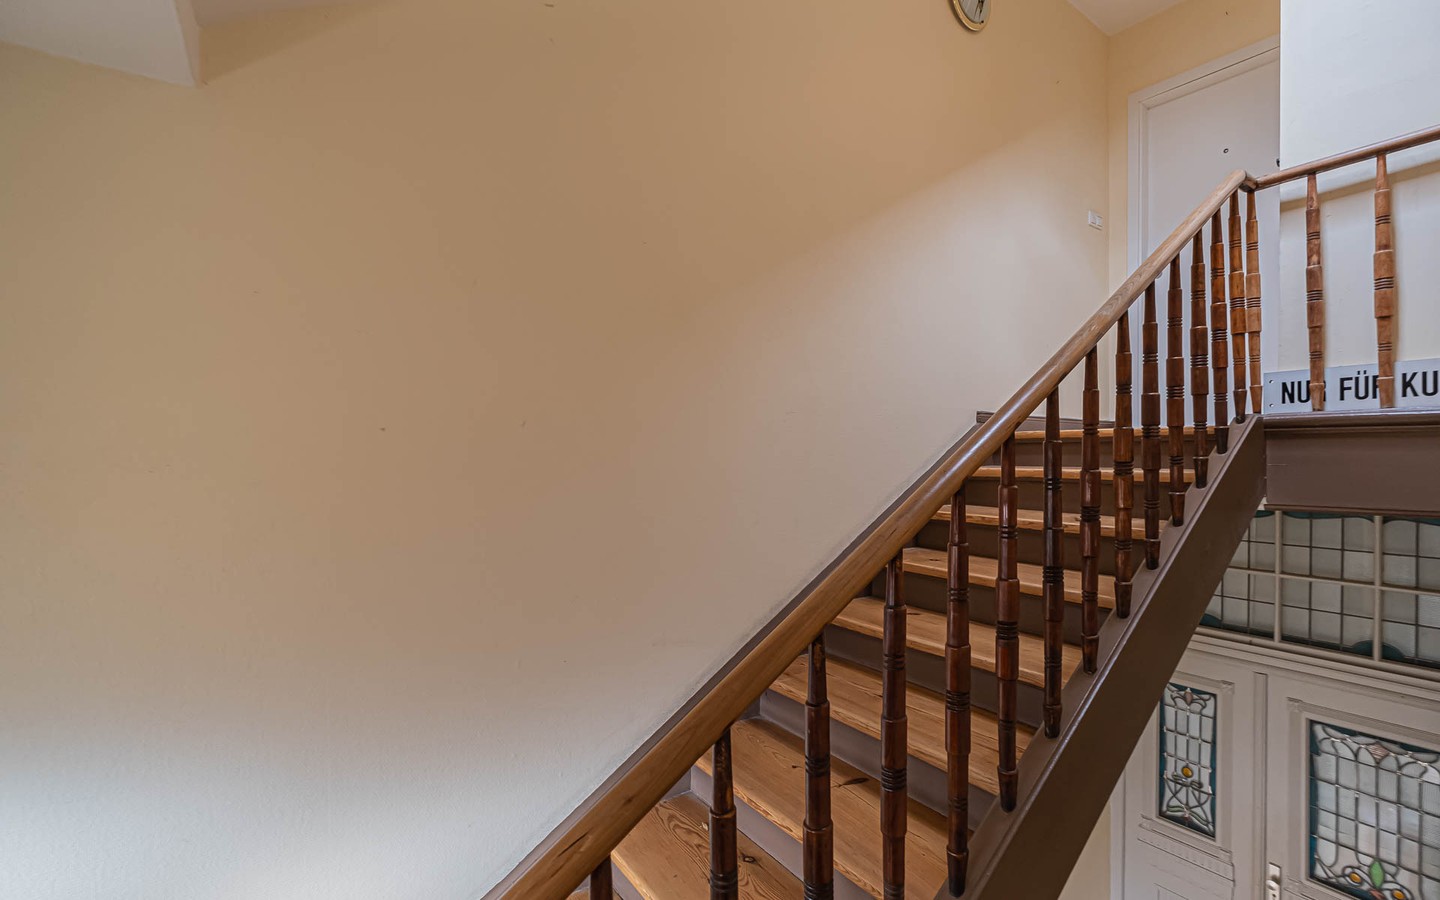 Treppenhaus - Rarität – Dachgeschosswohnung mit Schlossblick -
 Ideal für kreative Singles oder Paare